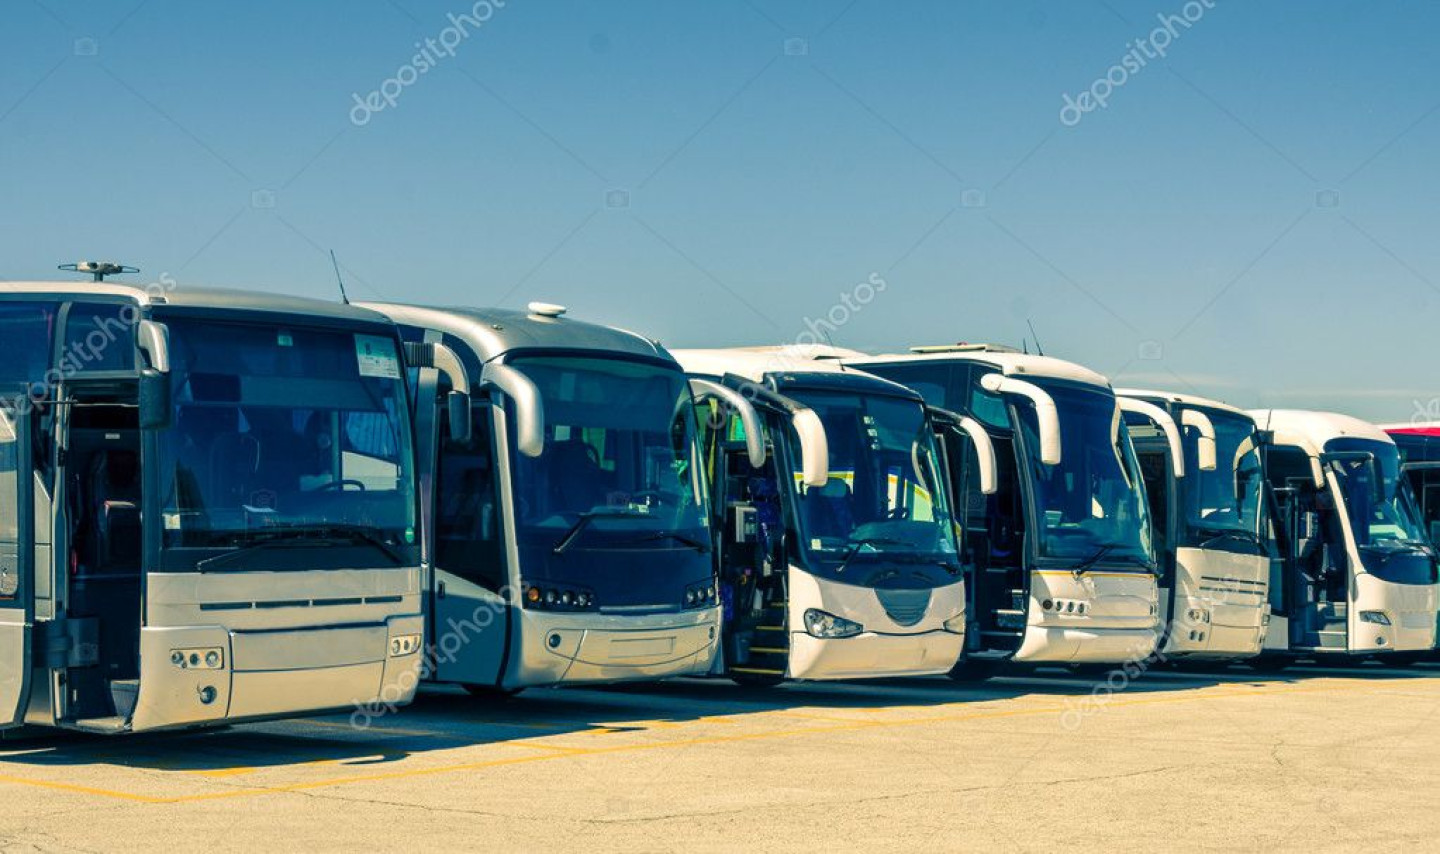 depositphotos_46469821-stock-photo-touristic-buses